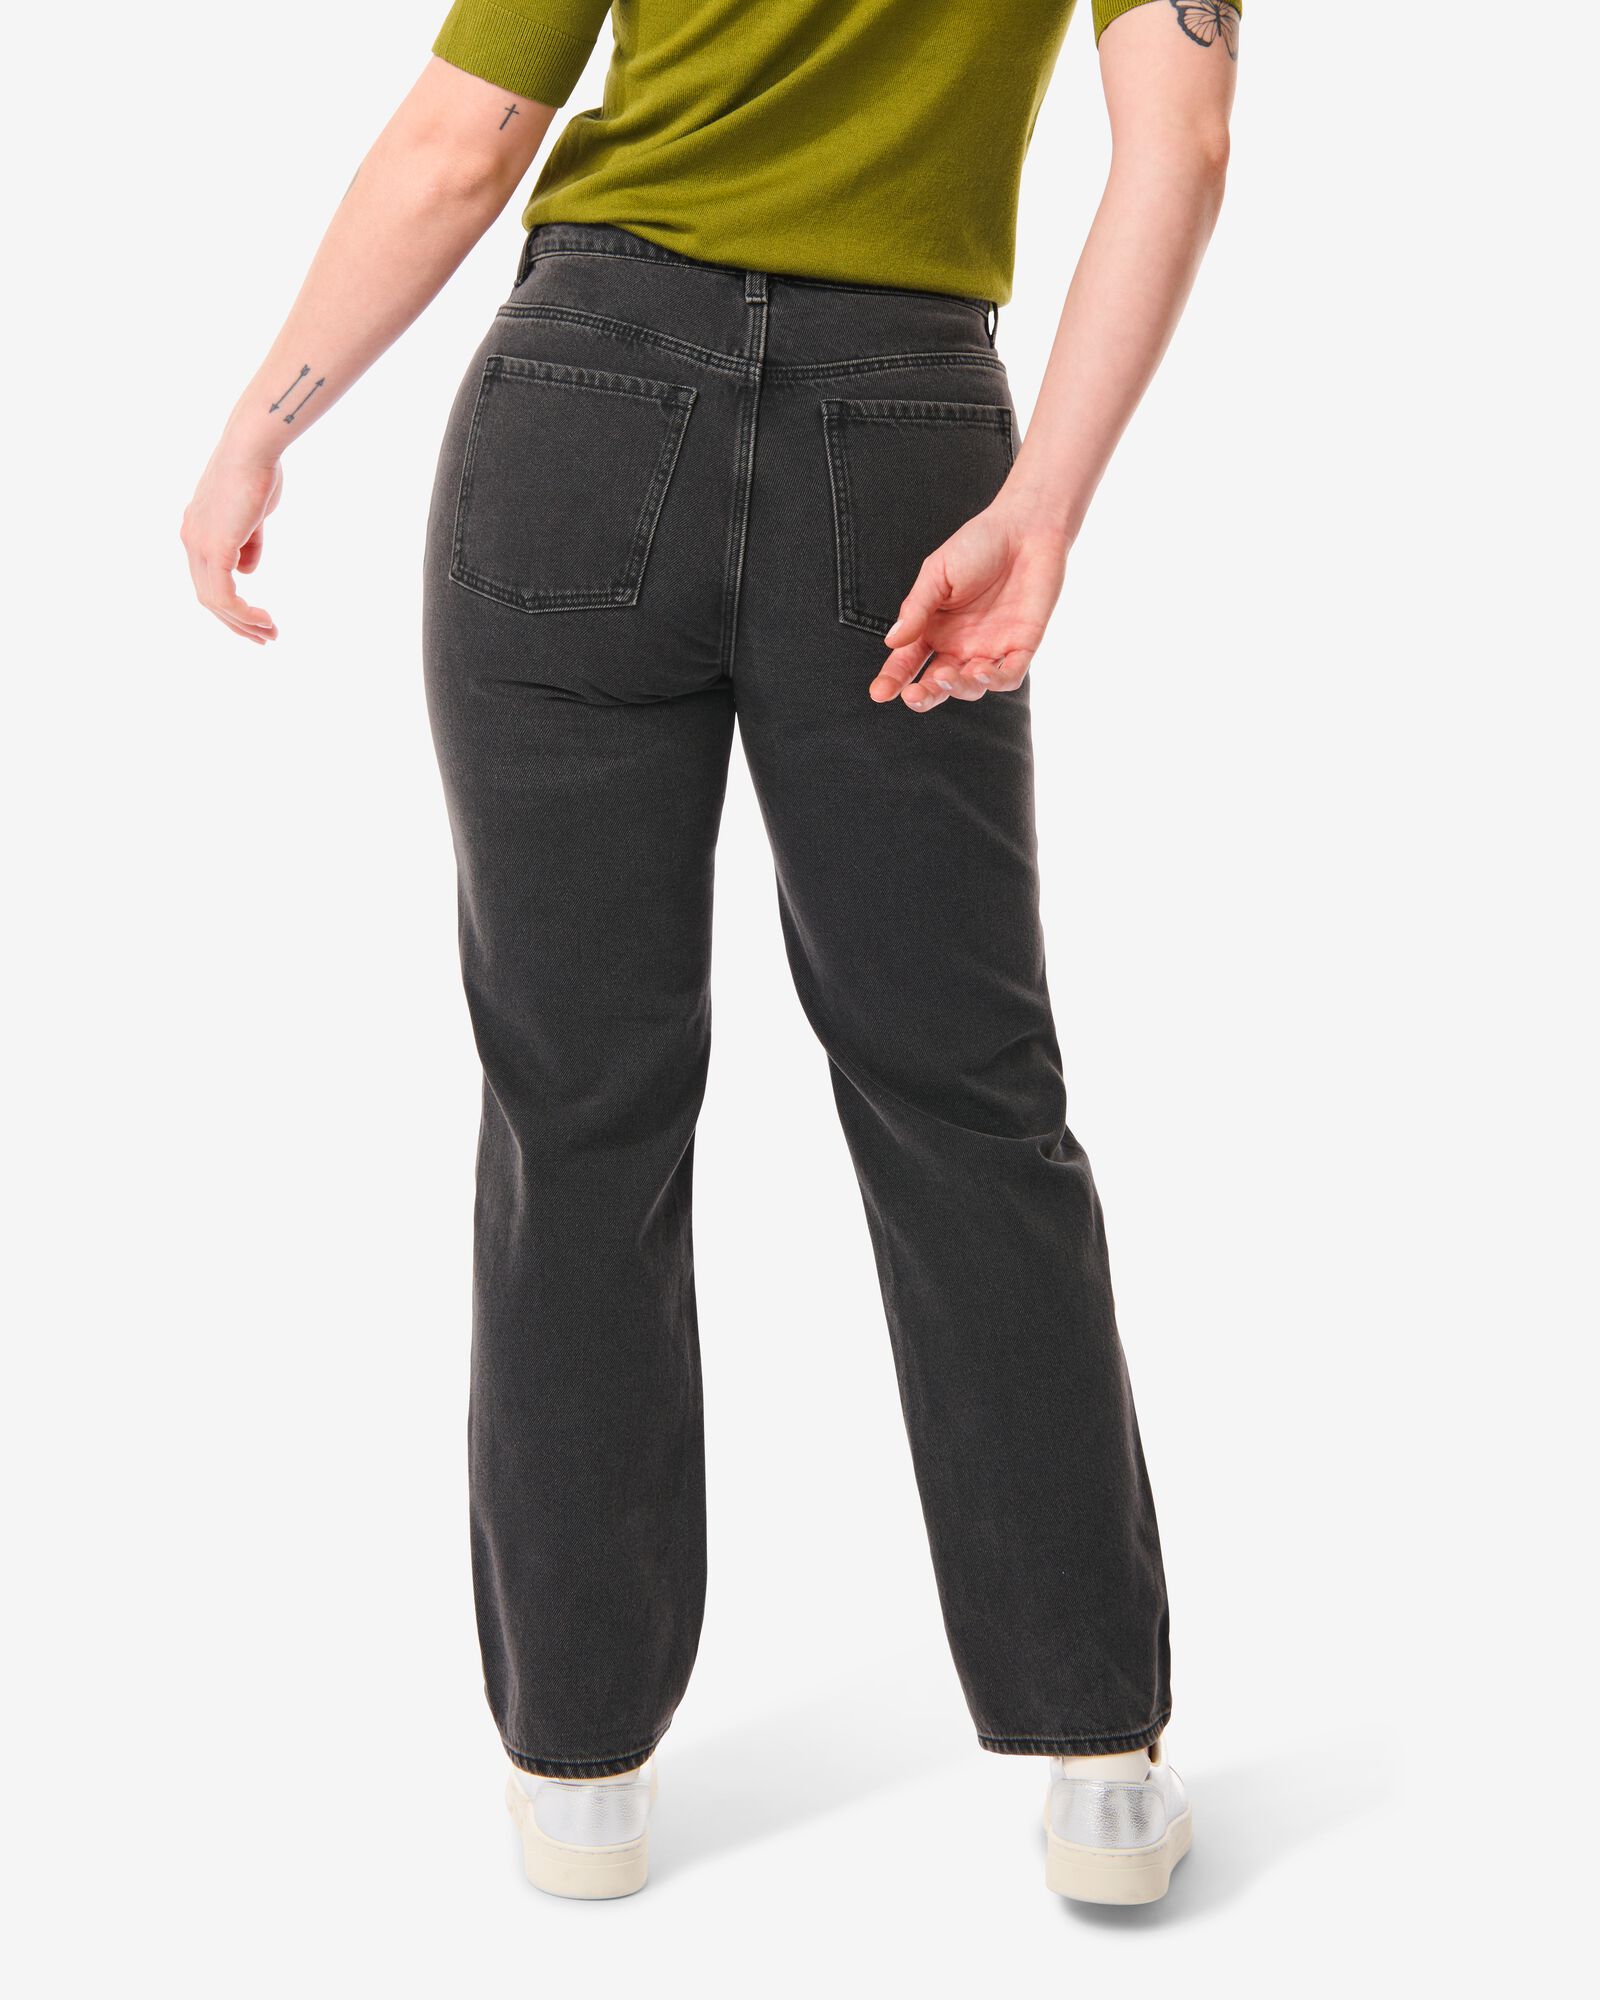 Damen-Jeans, Straight Fit dunkelgrau 42 - 36319984 - HEMA